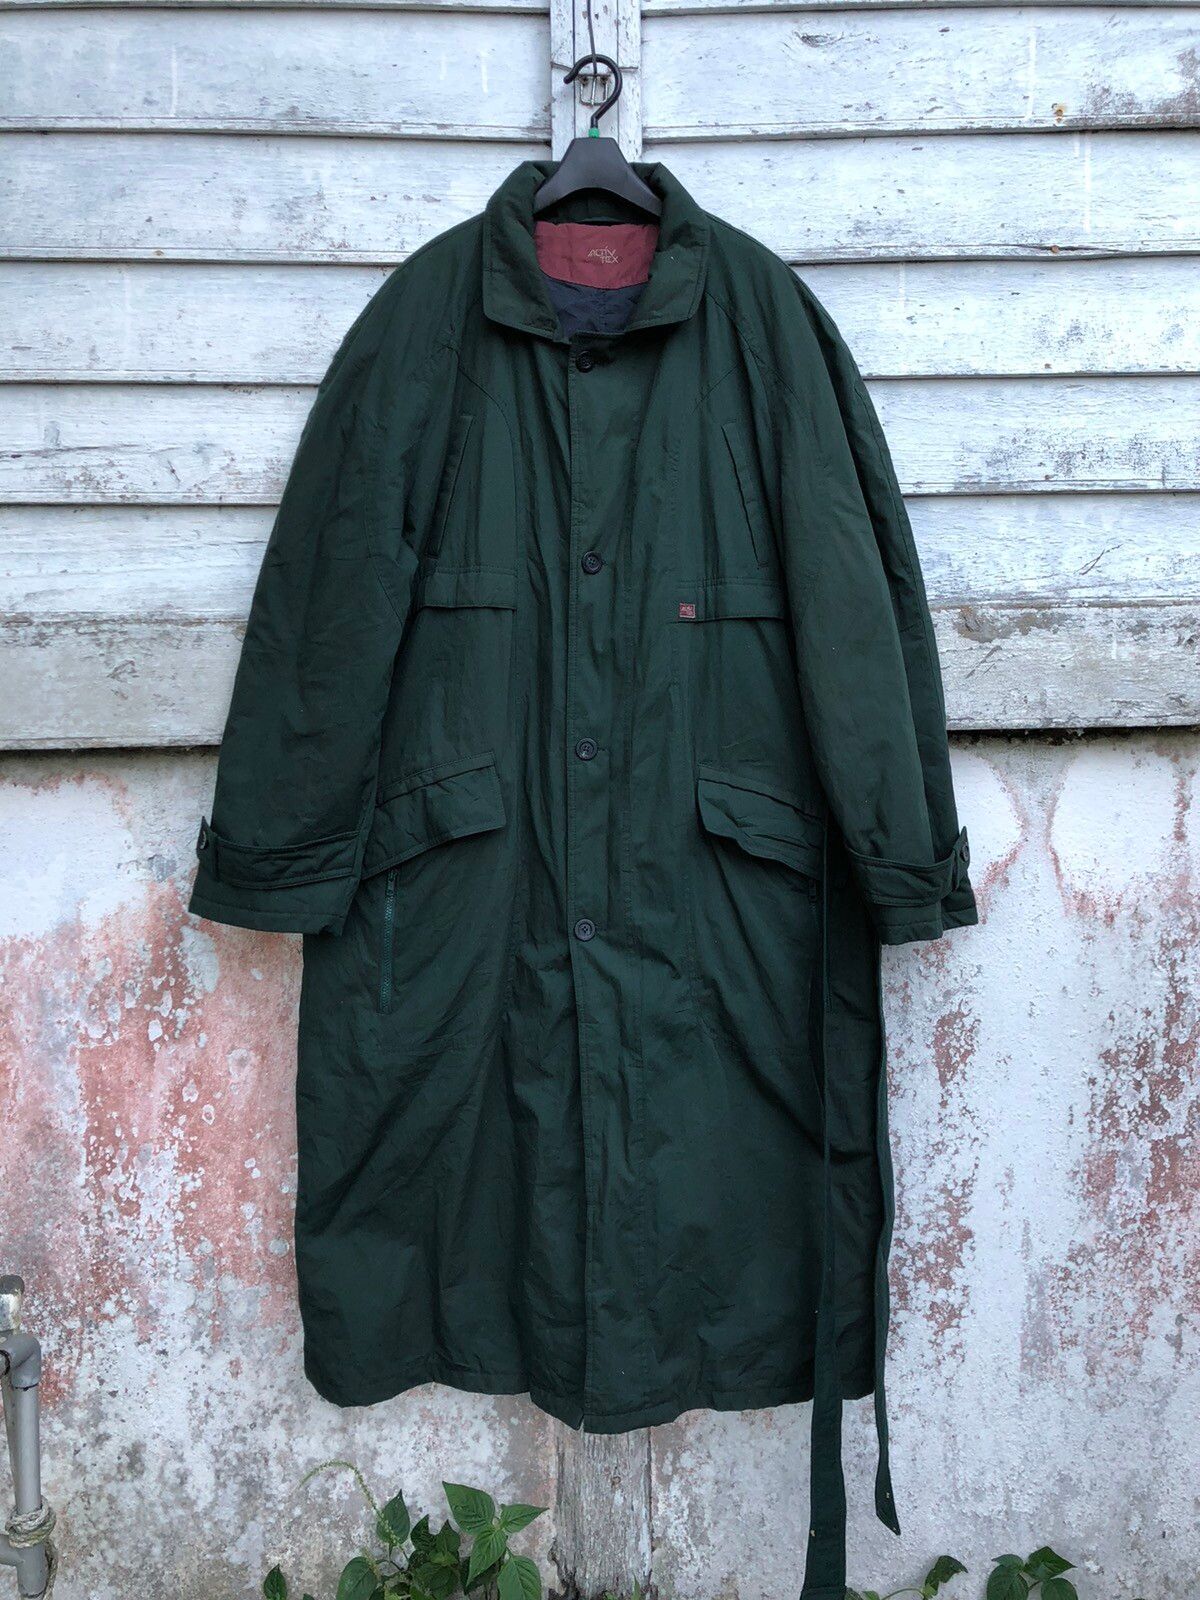 Outdoor Style Go Out! Activ Tex Biiltel West Germany Rainproof Weatherproof Coat Size US L / EU 52-54 / 3 - 1 Preview